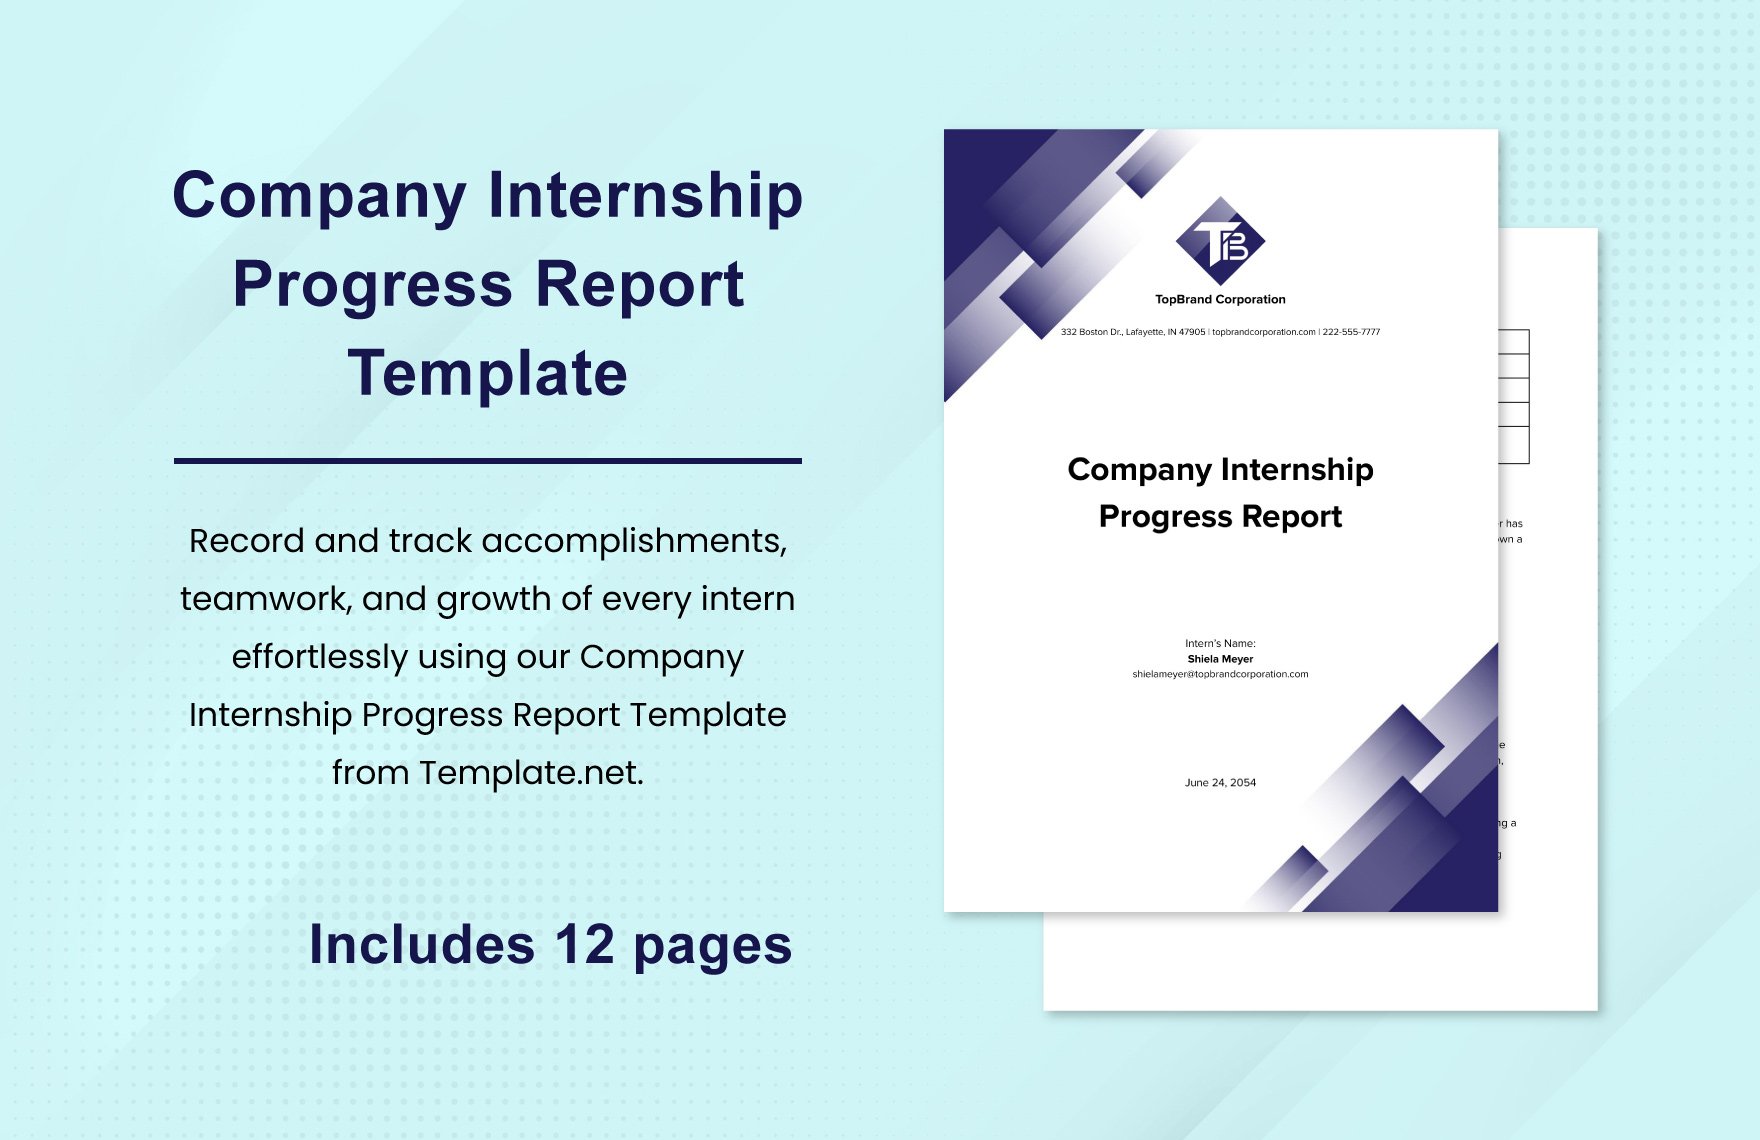 Company Internship Progress Report Template